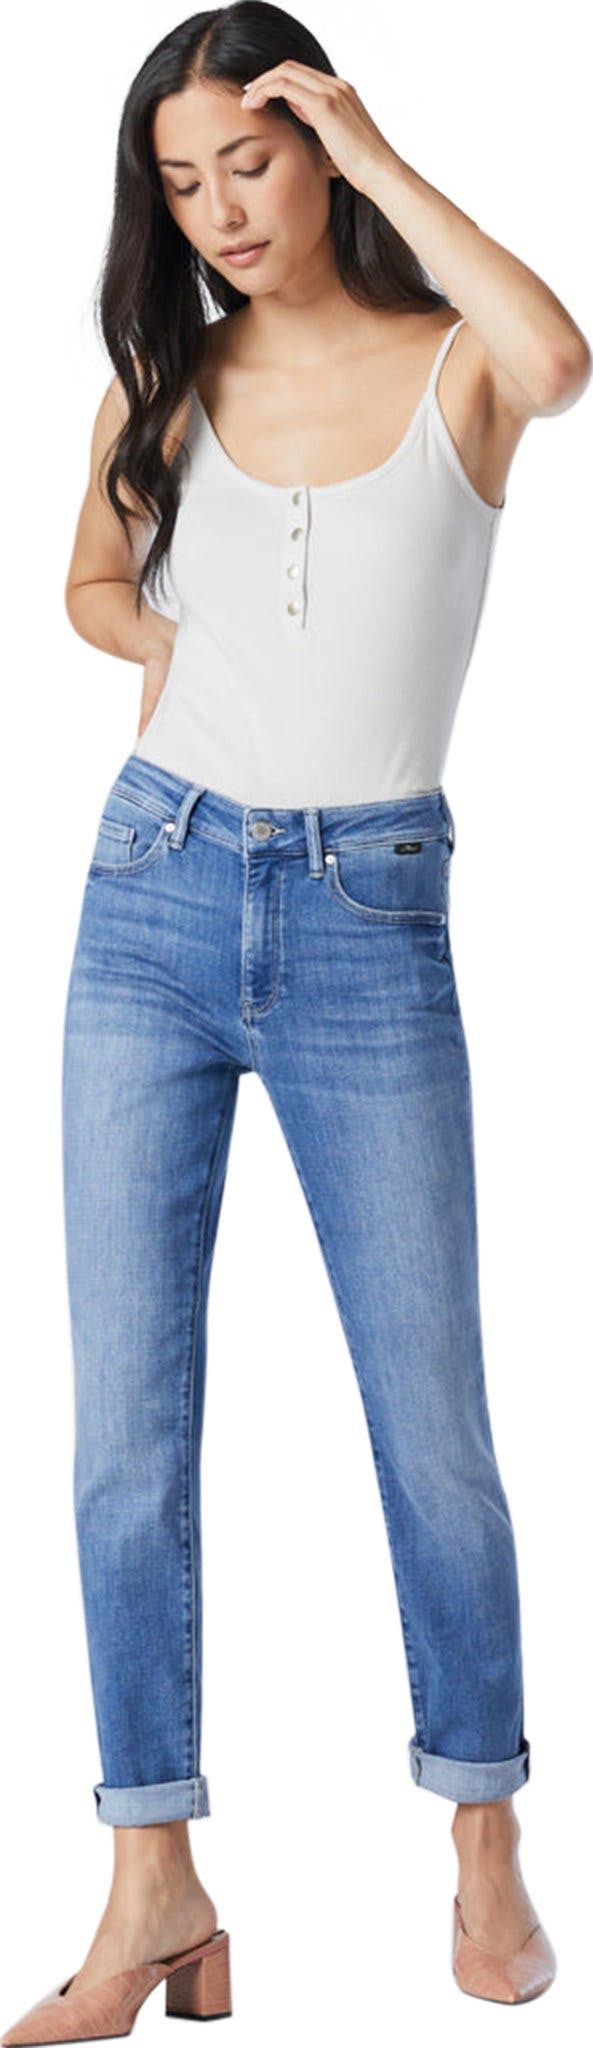 Product image for Kathleen Slim Boyfriend Jeans - Women's